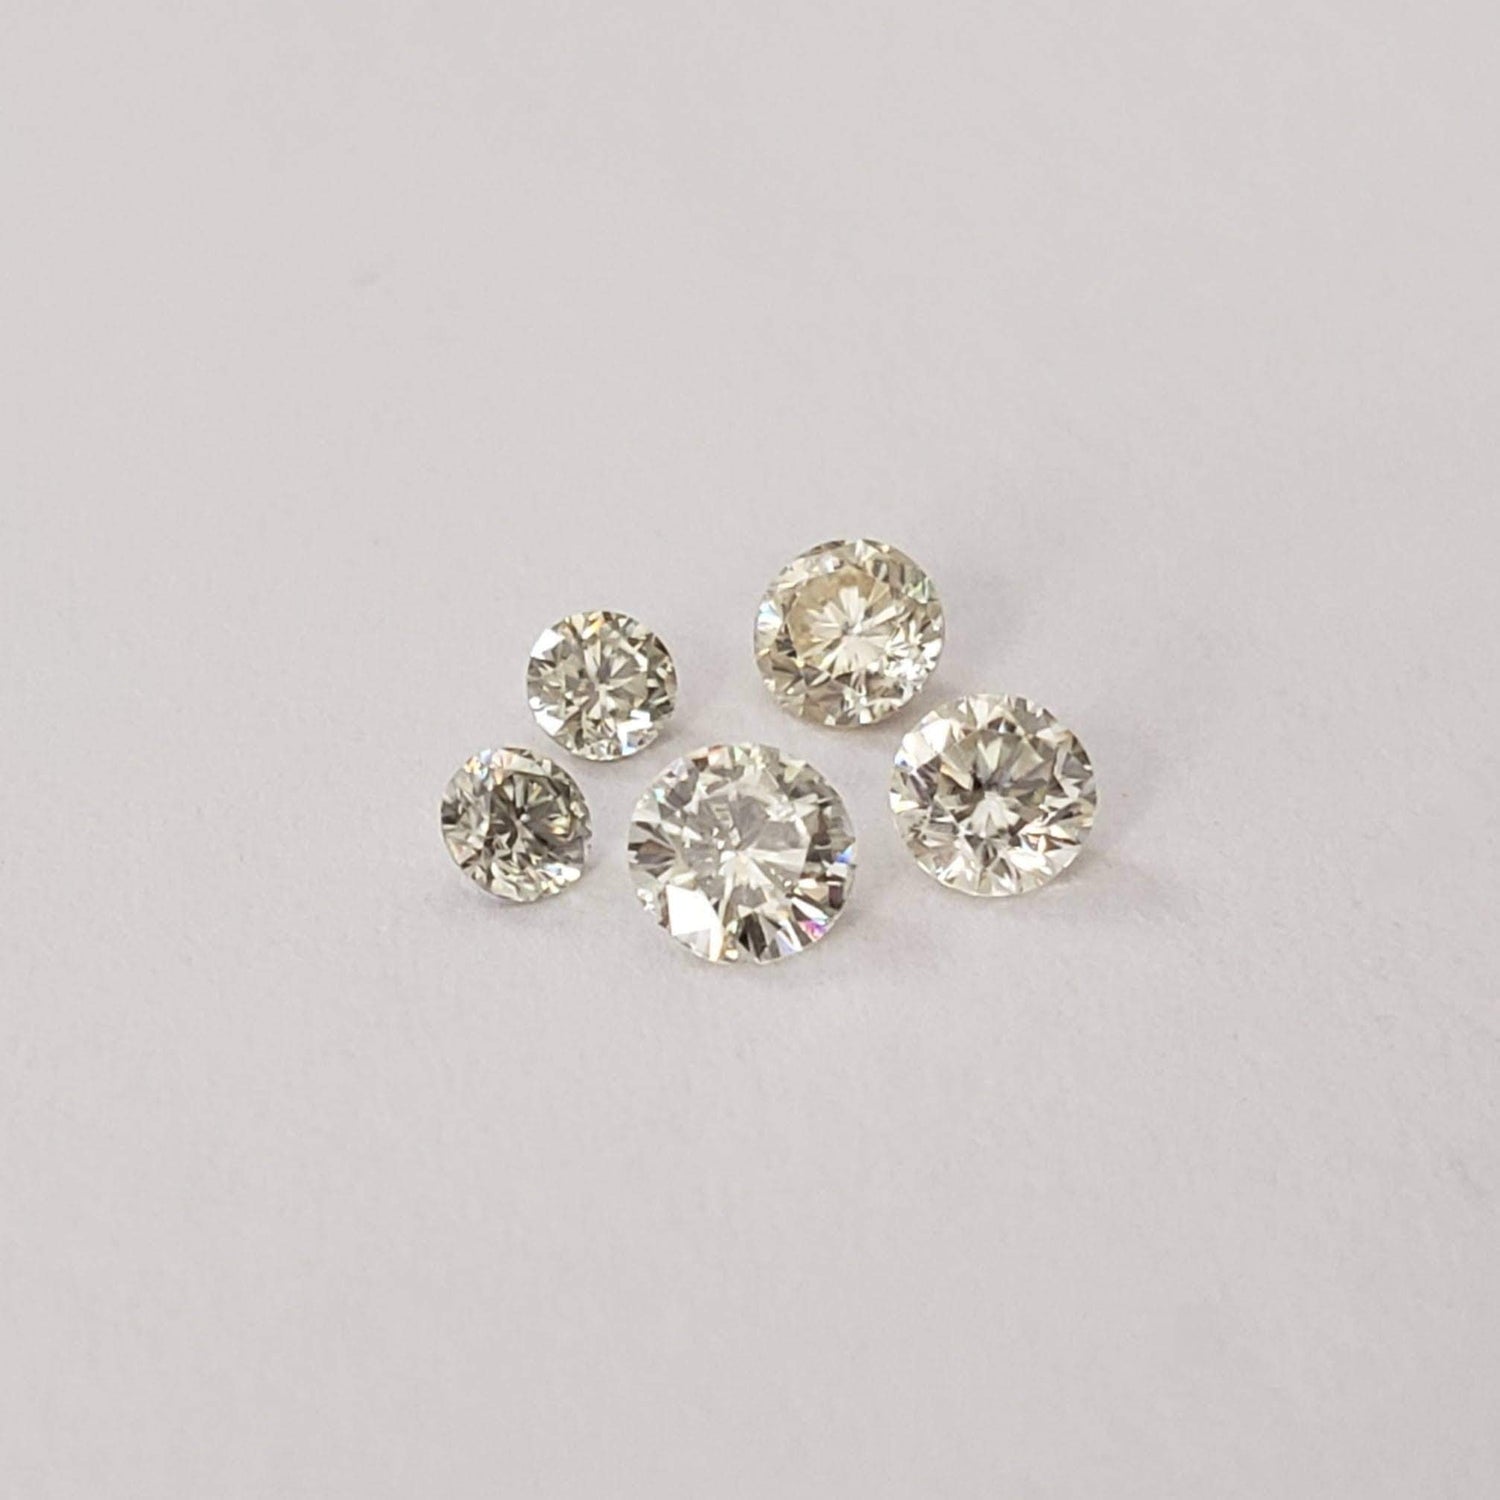 Moissanite | 5 Piece Gemstone Lot | Round Diamond Cut | White | 0.53tcw